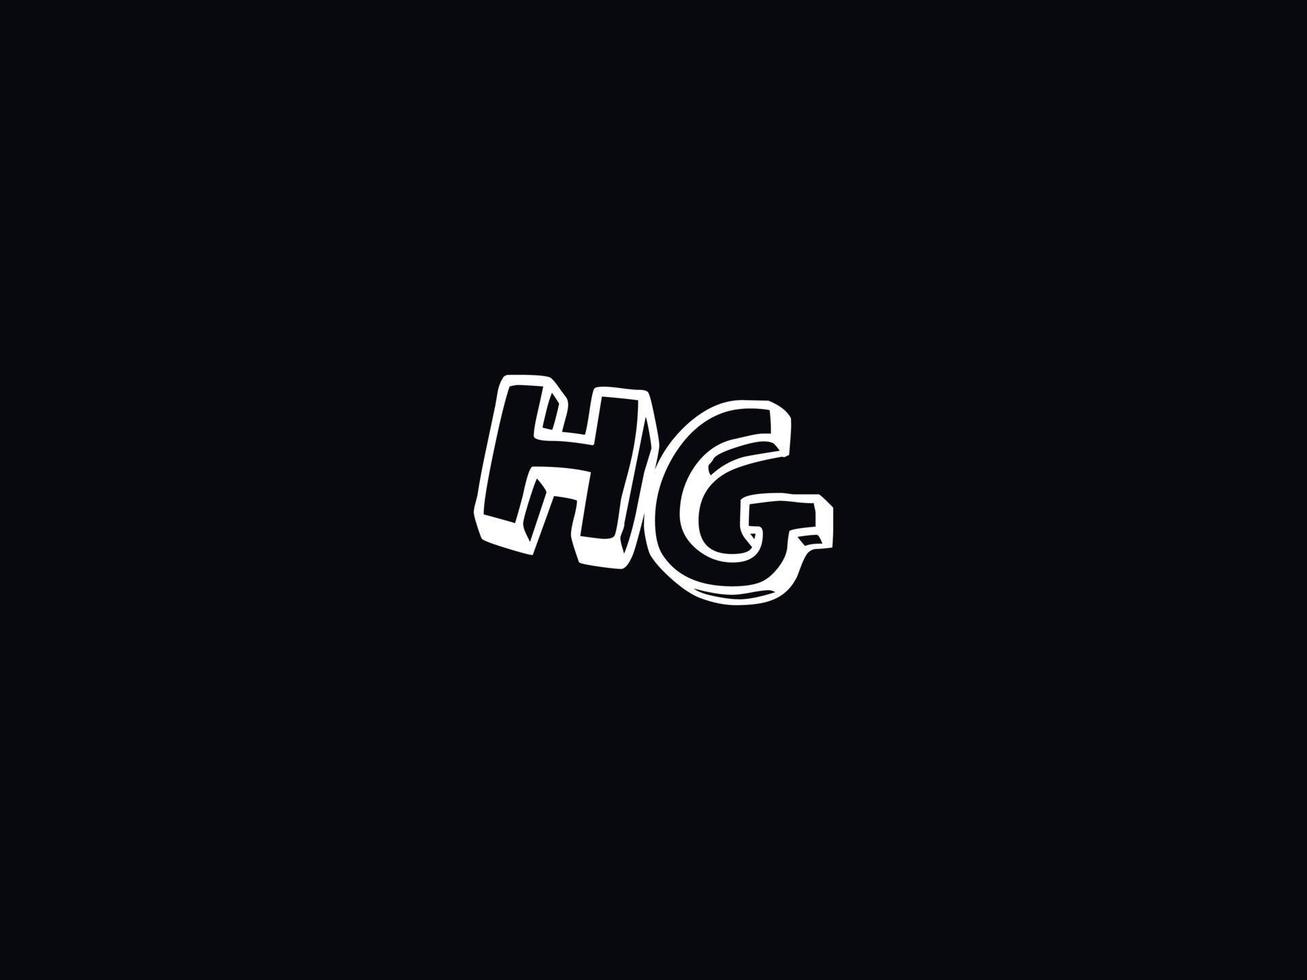 typographie hg logo, Créatif hg brosse lettre logo vecteur